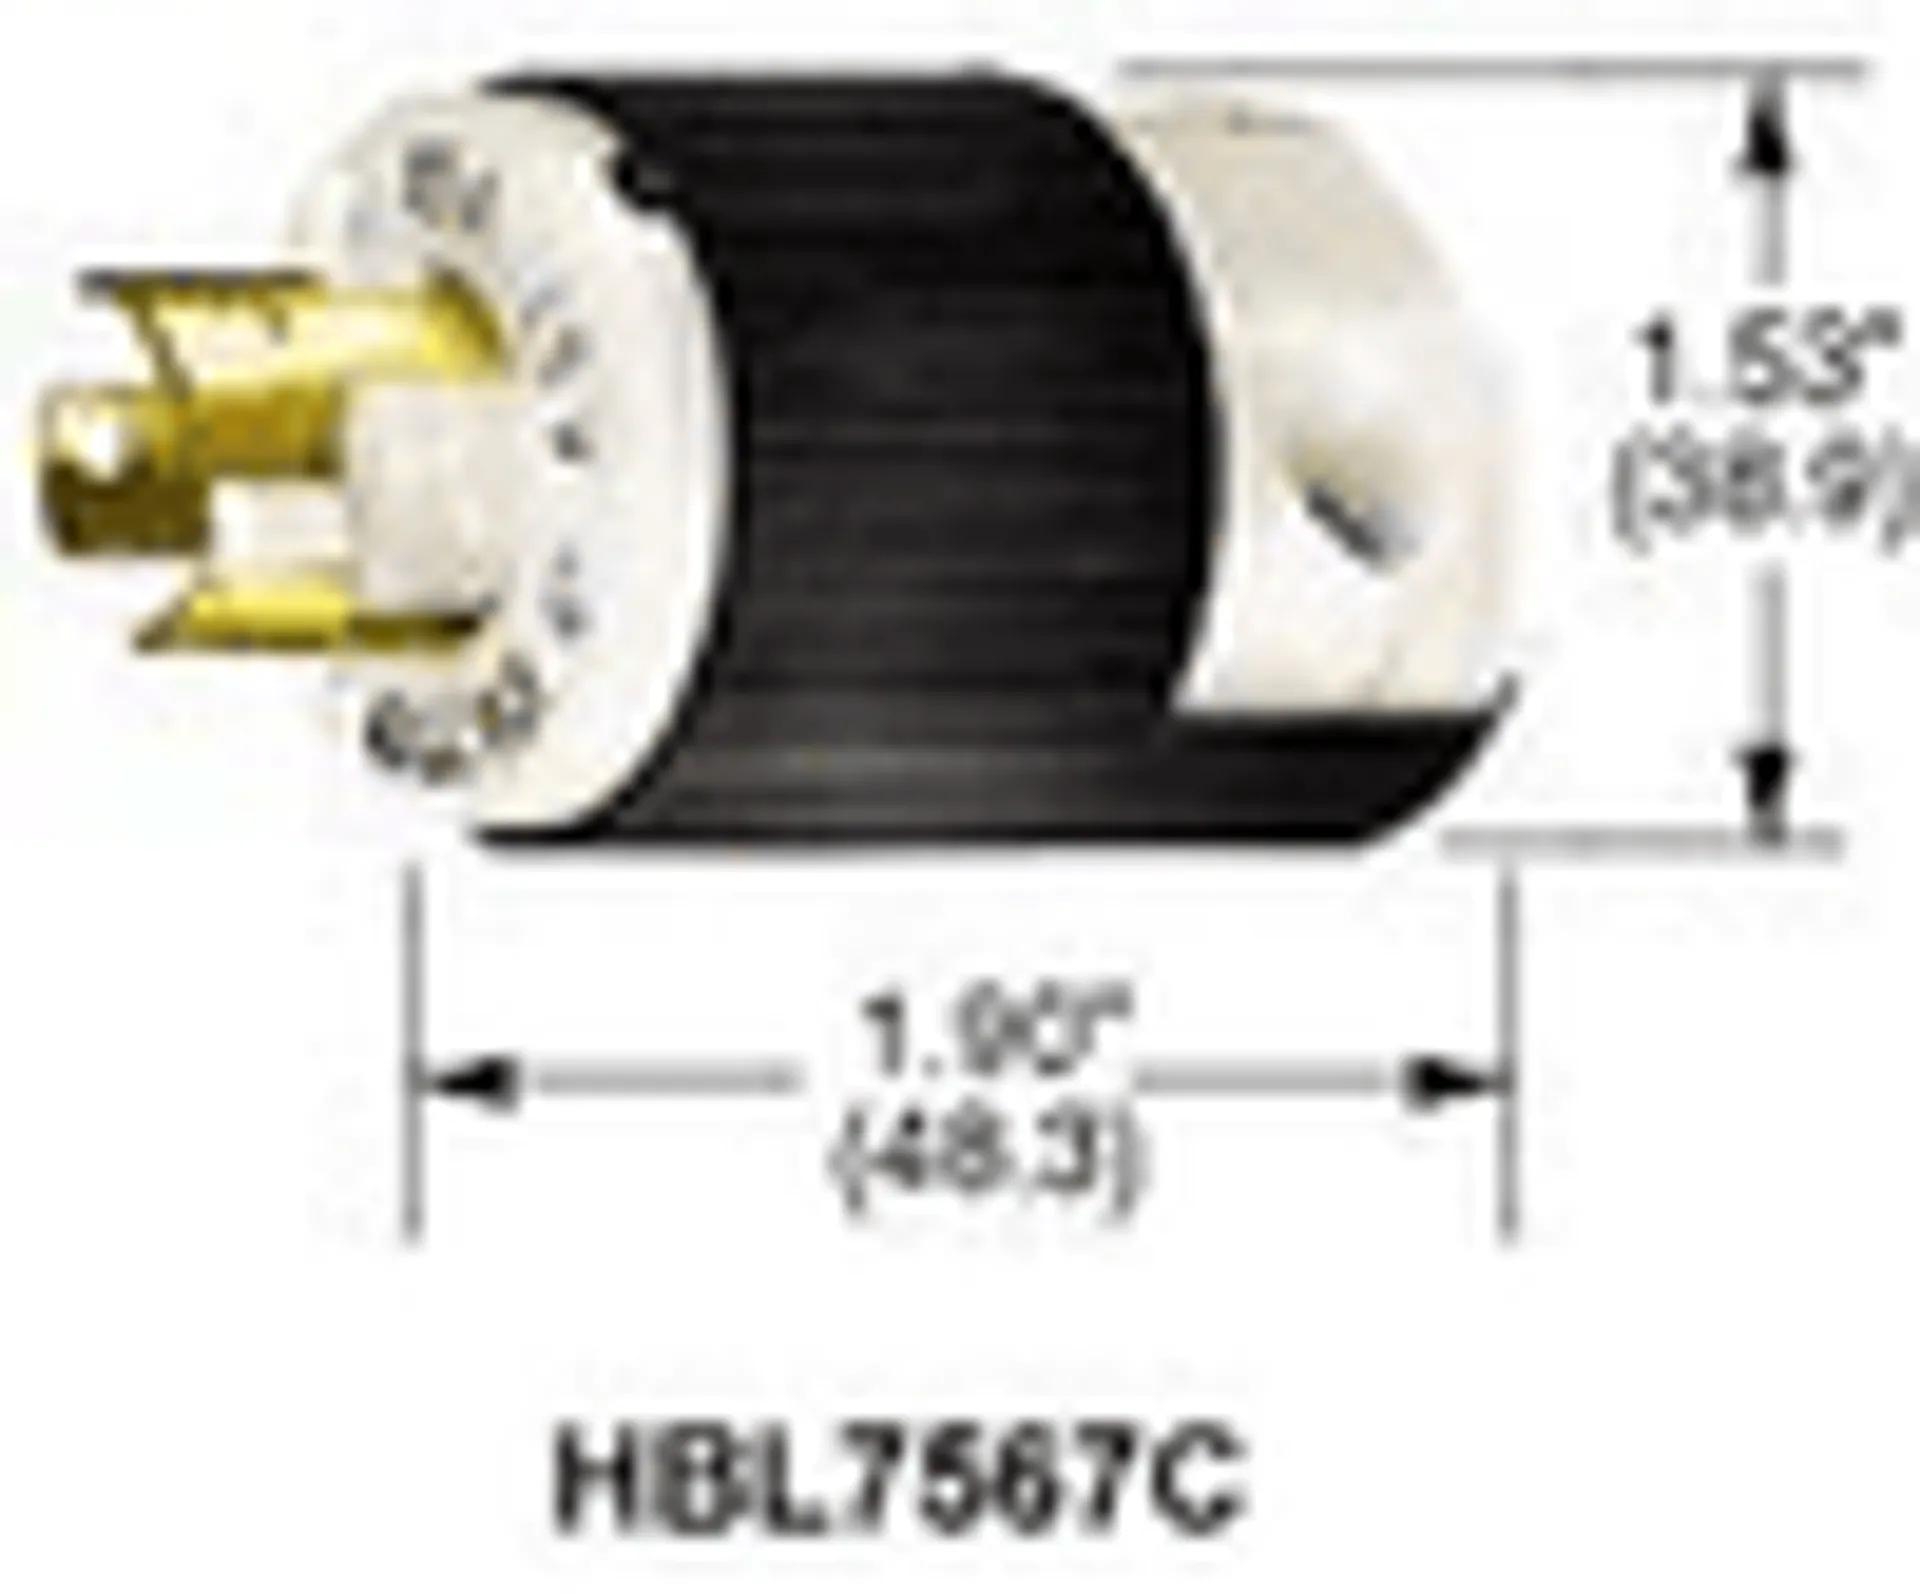 HBL7567C